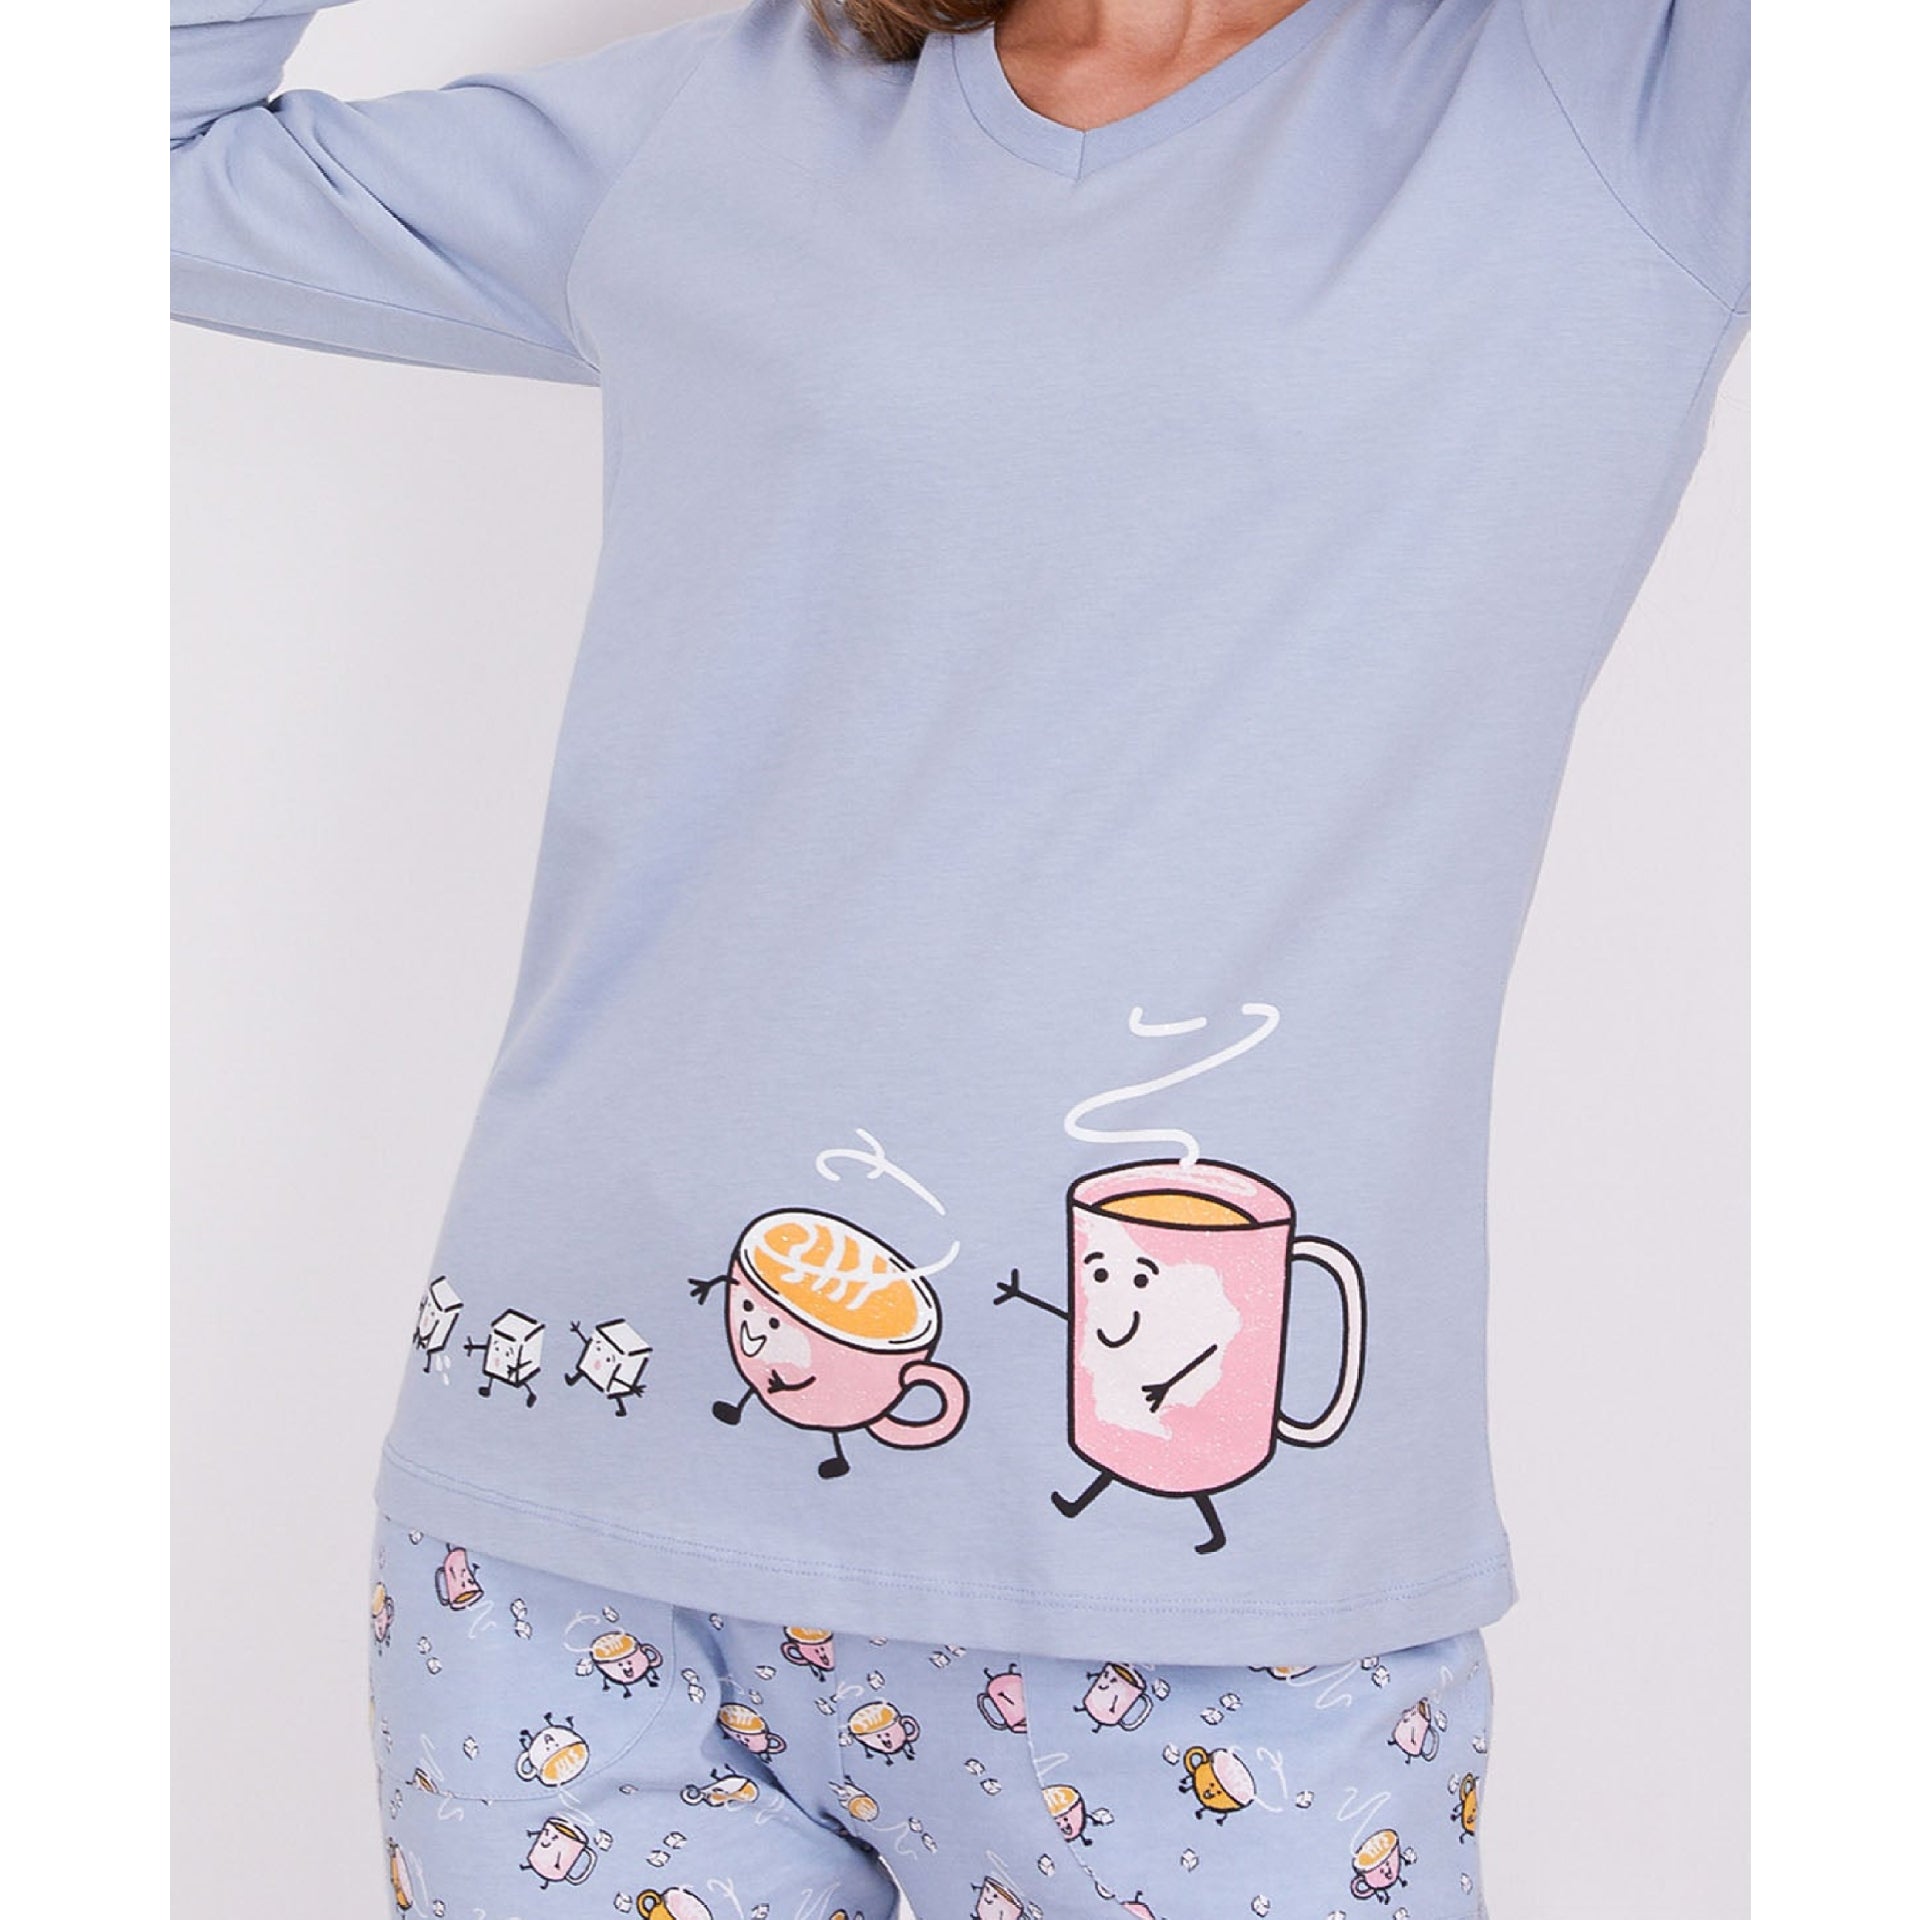 Breakfast Cup Pajama set